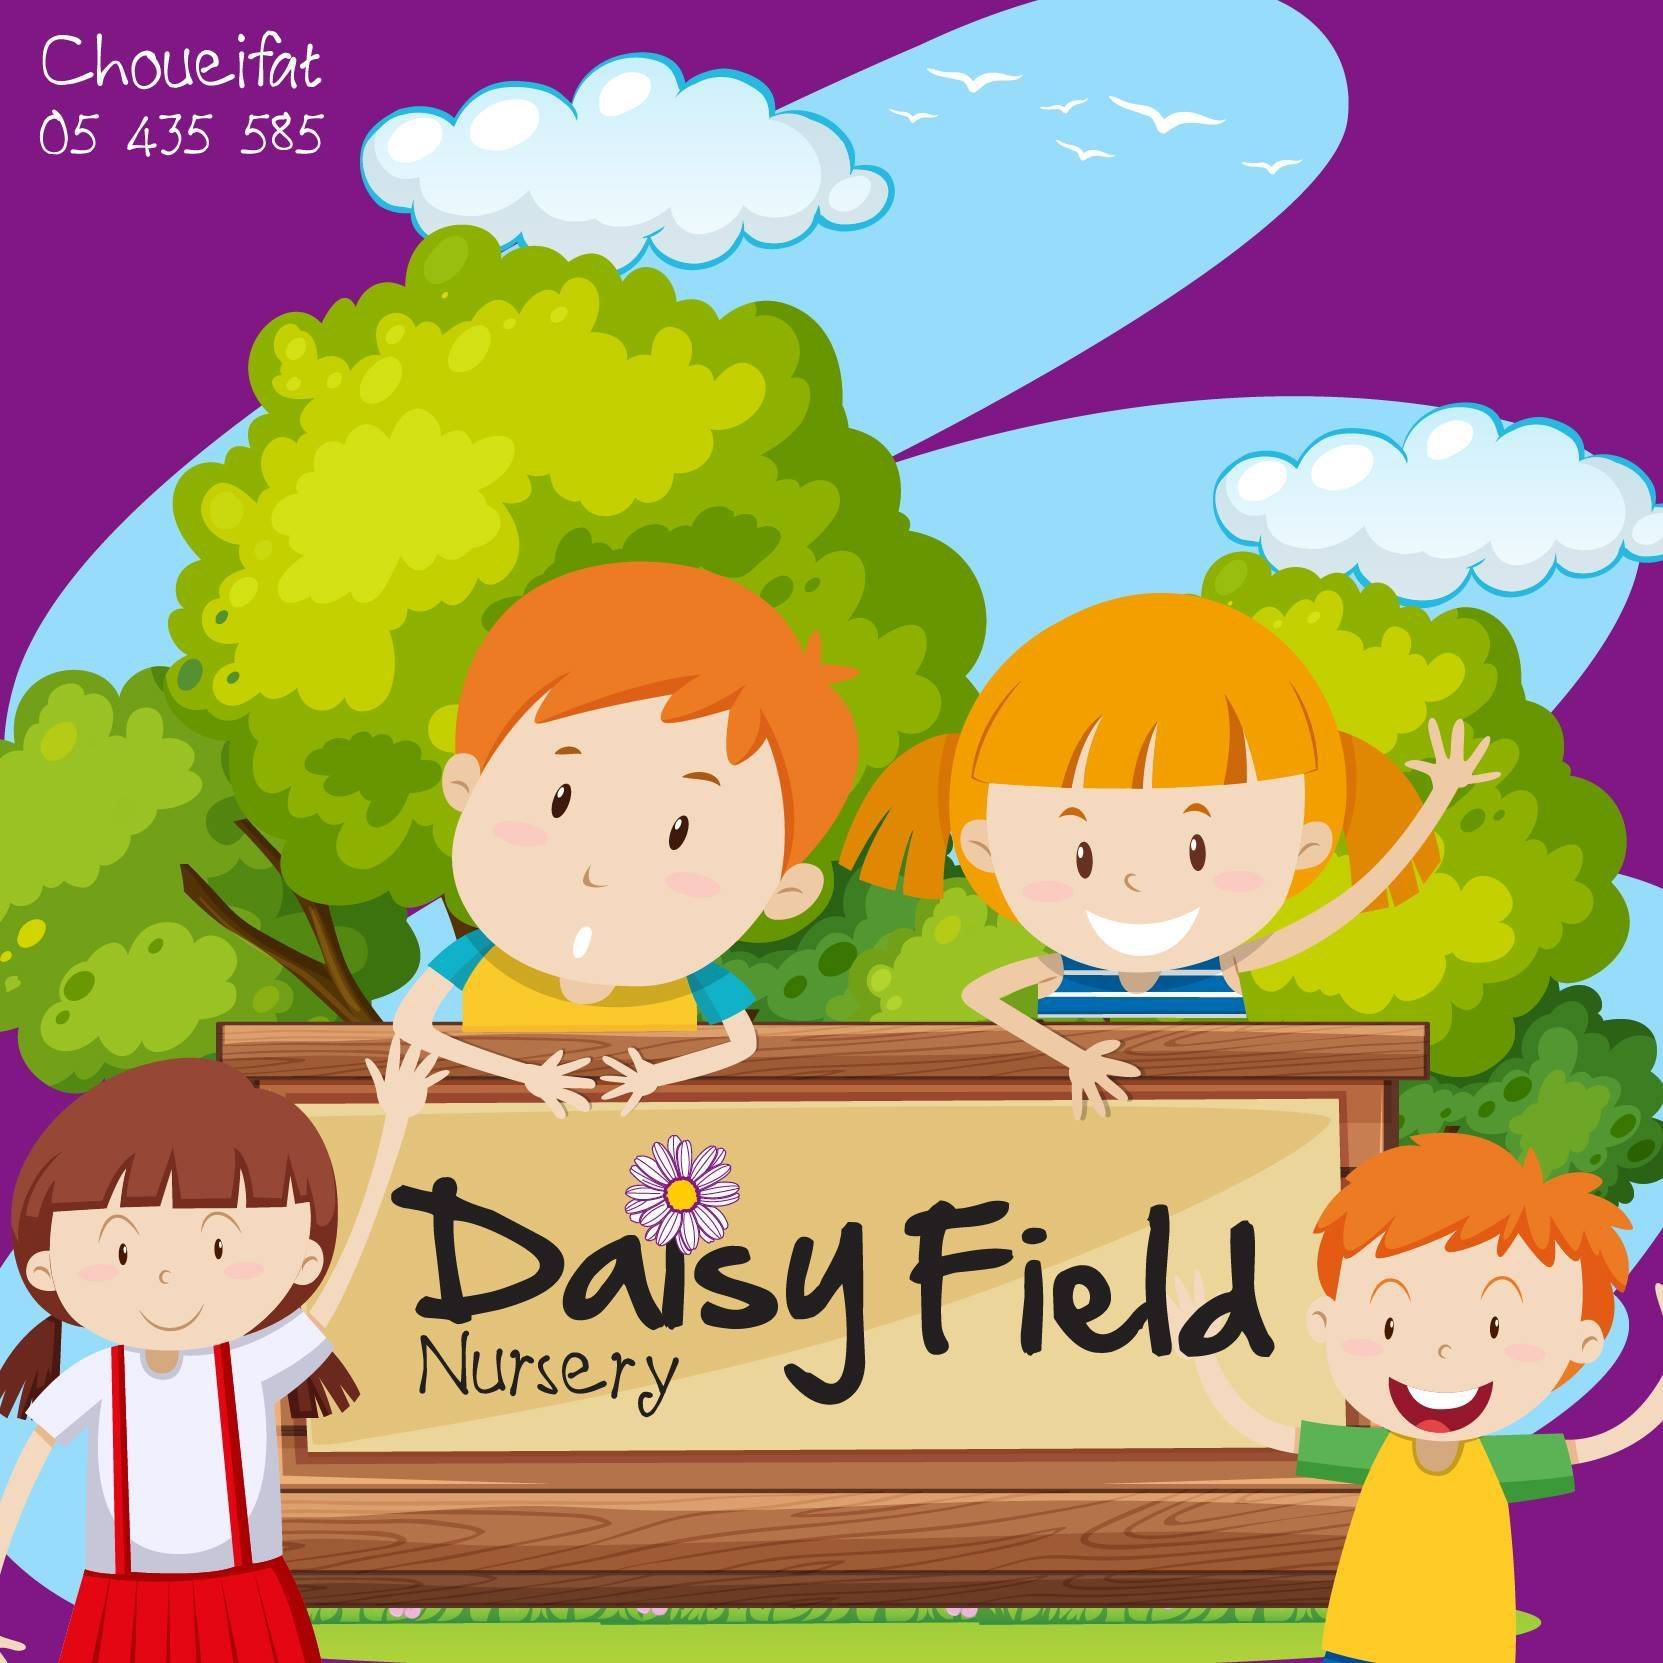 Nursery logo Daisy field Nursery